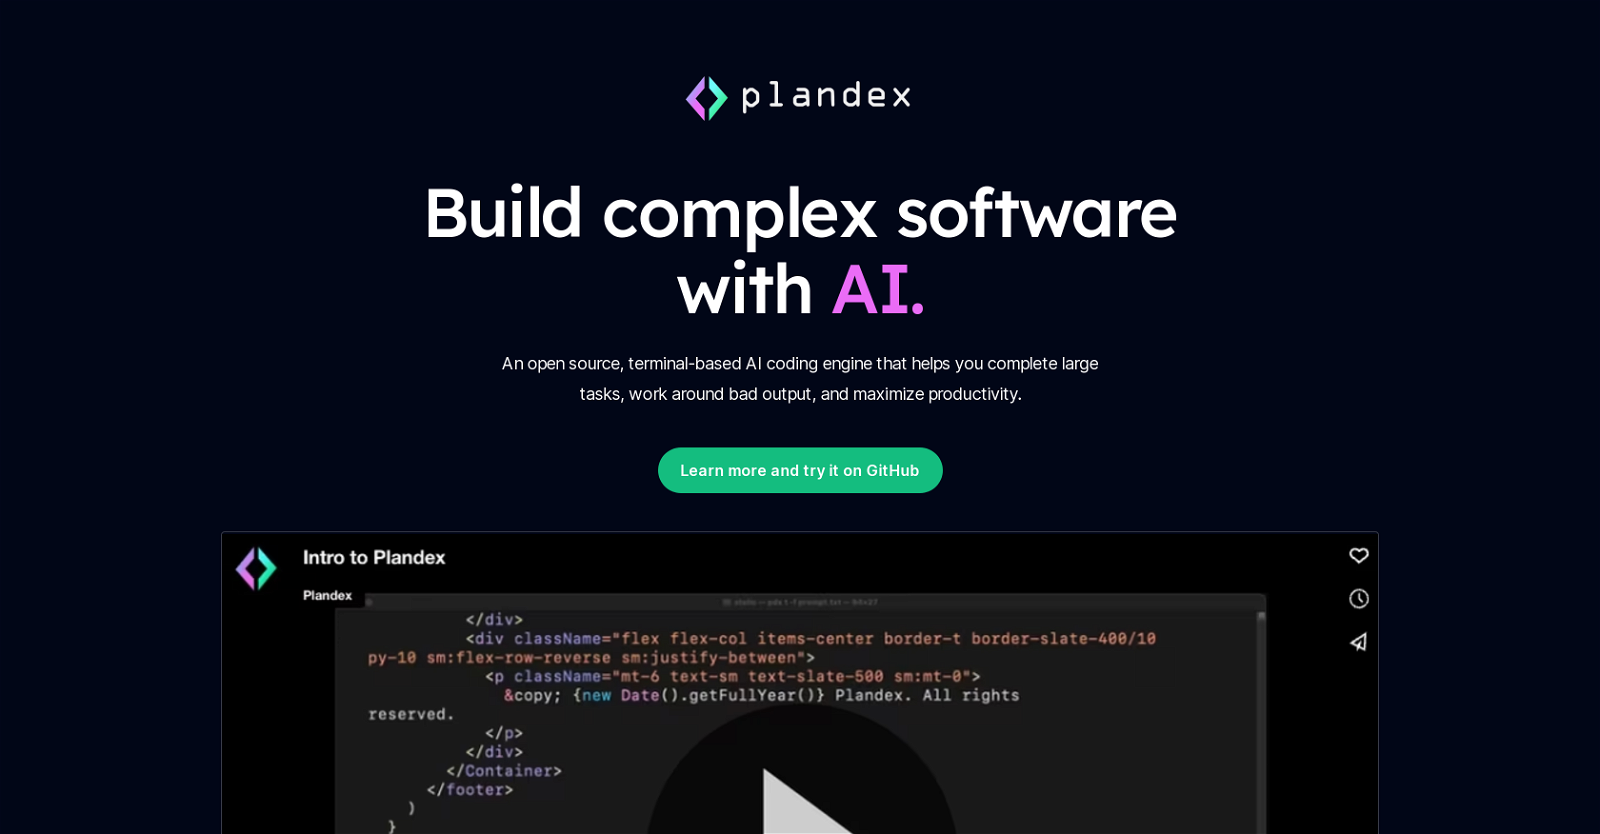 Plandex website